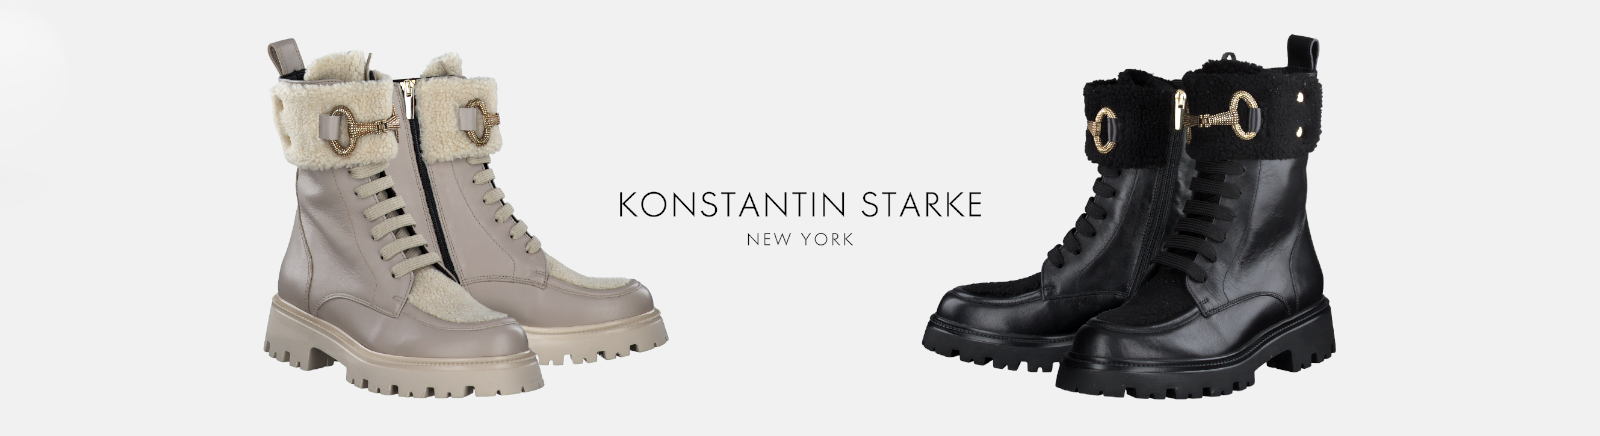 Luxuriöse Konstantin Starke Schuhe online bestellen | Juppen